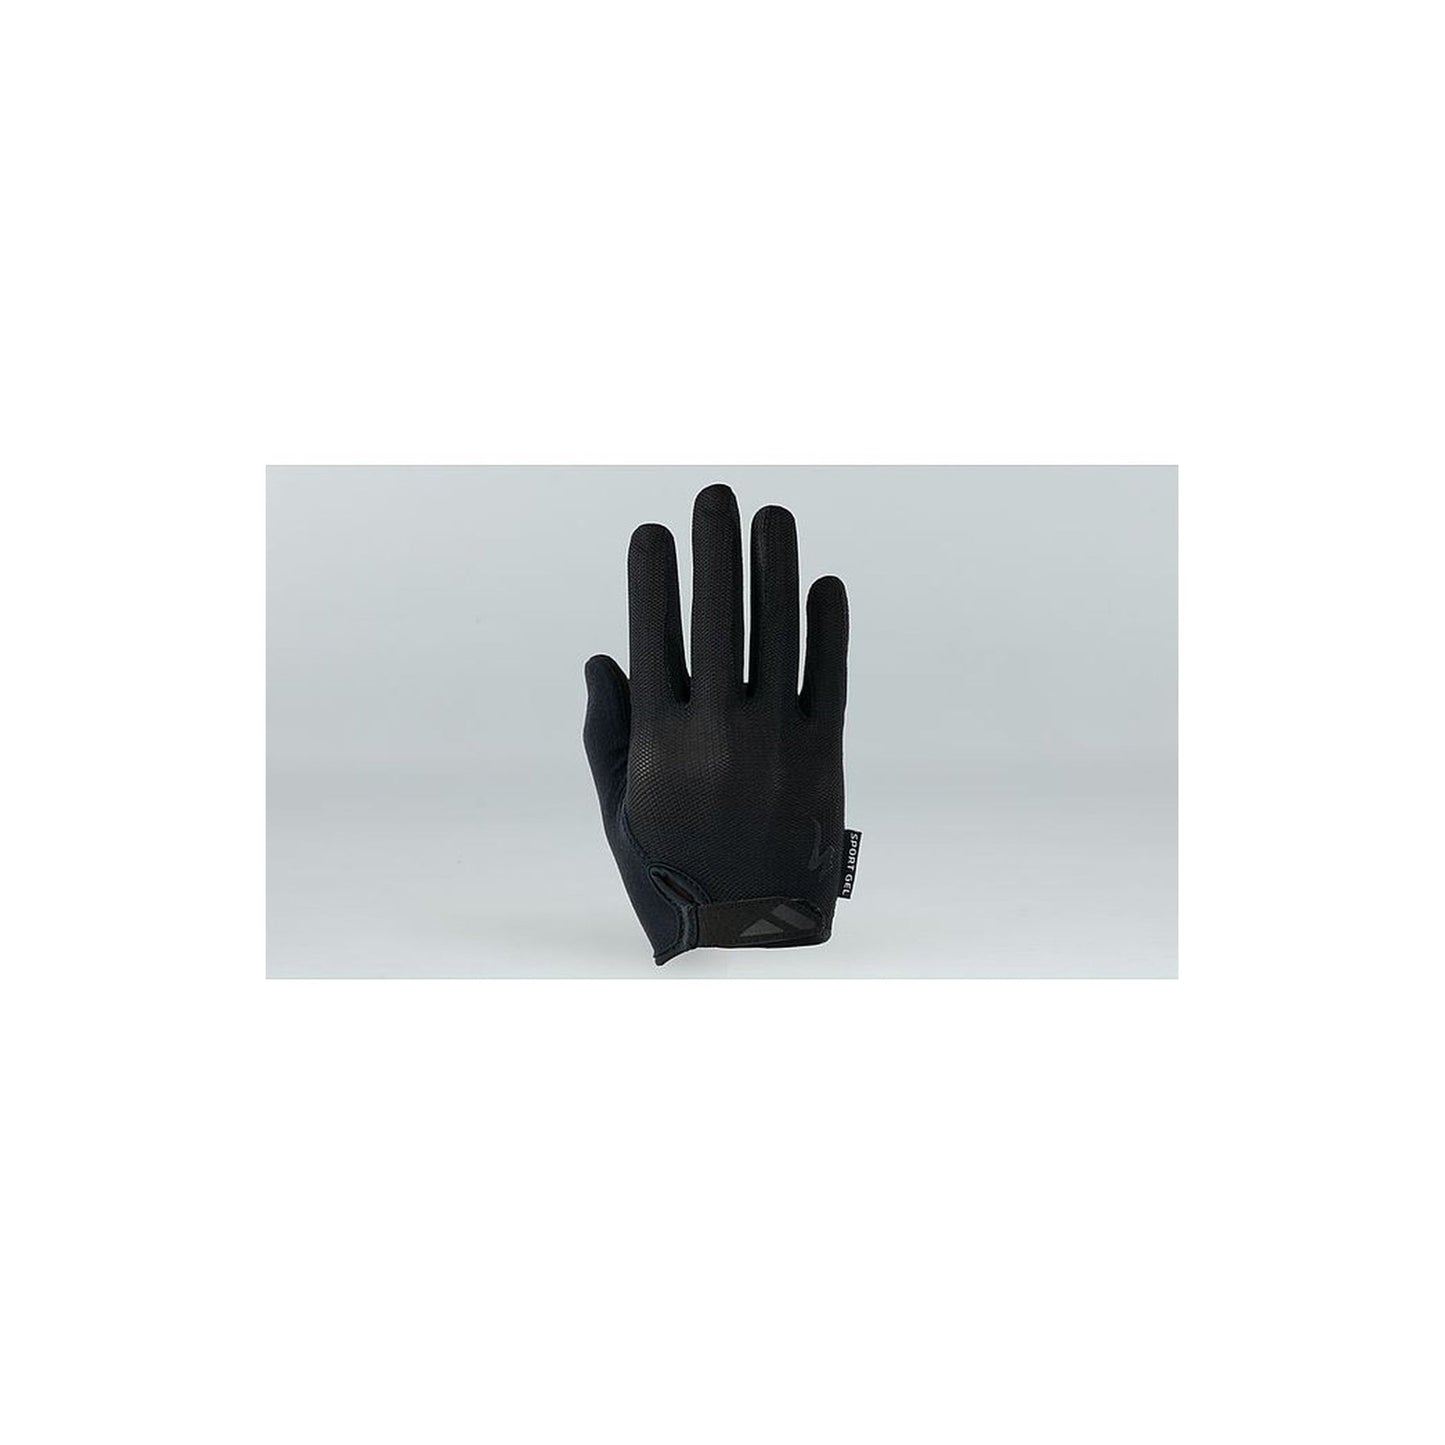 Women's Body Geometry Sport Gel Long Finger Gloves-Cycles Direct Specialized